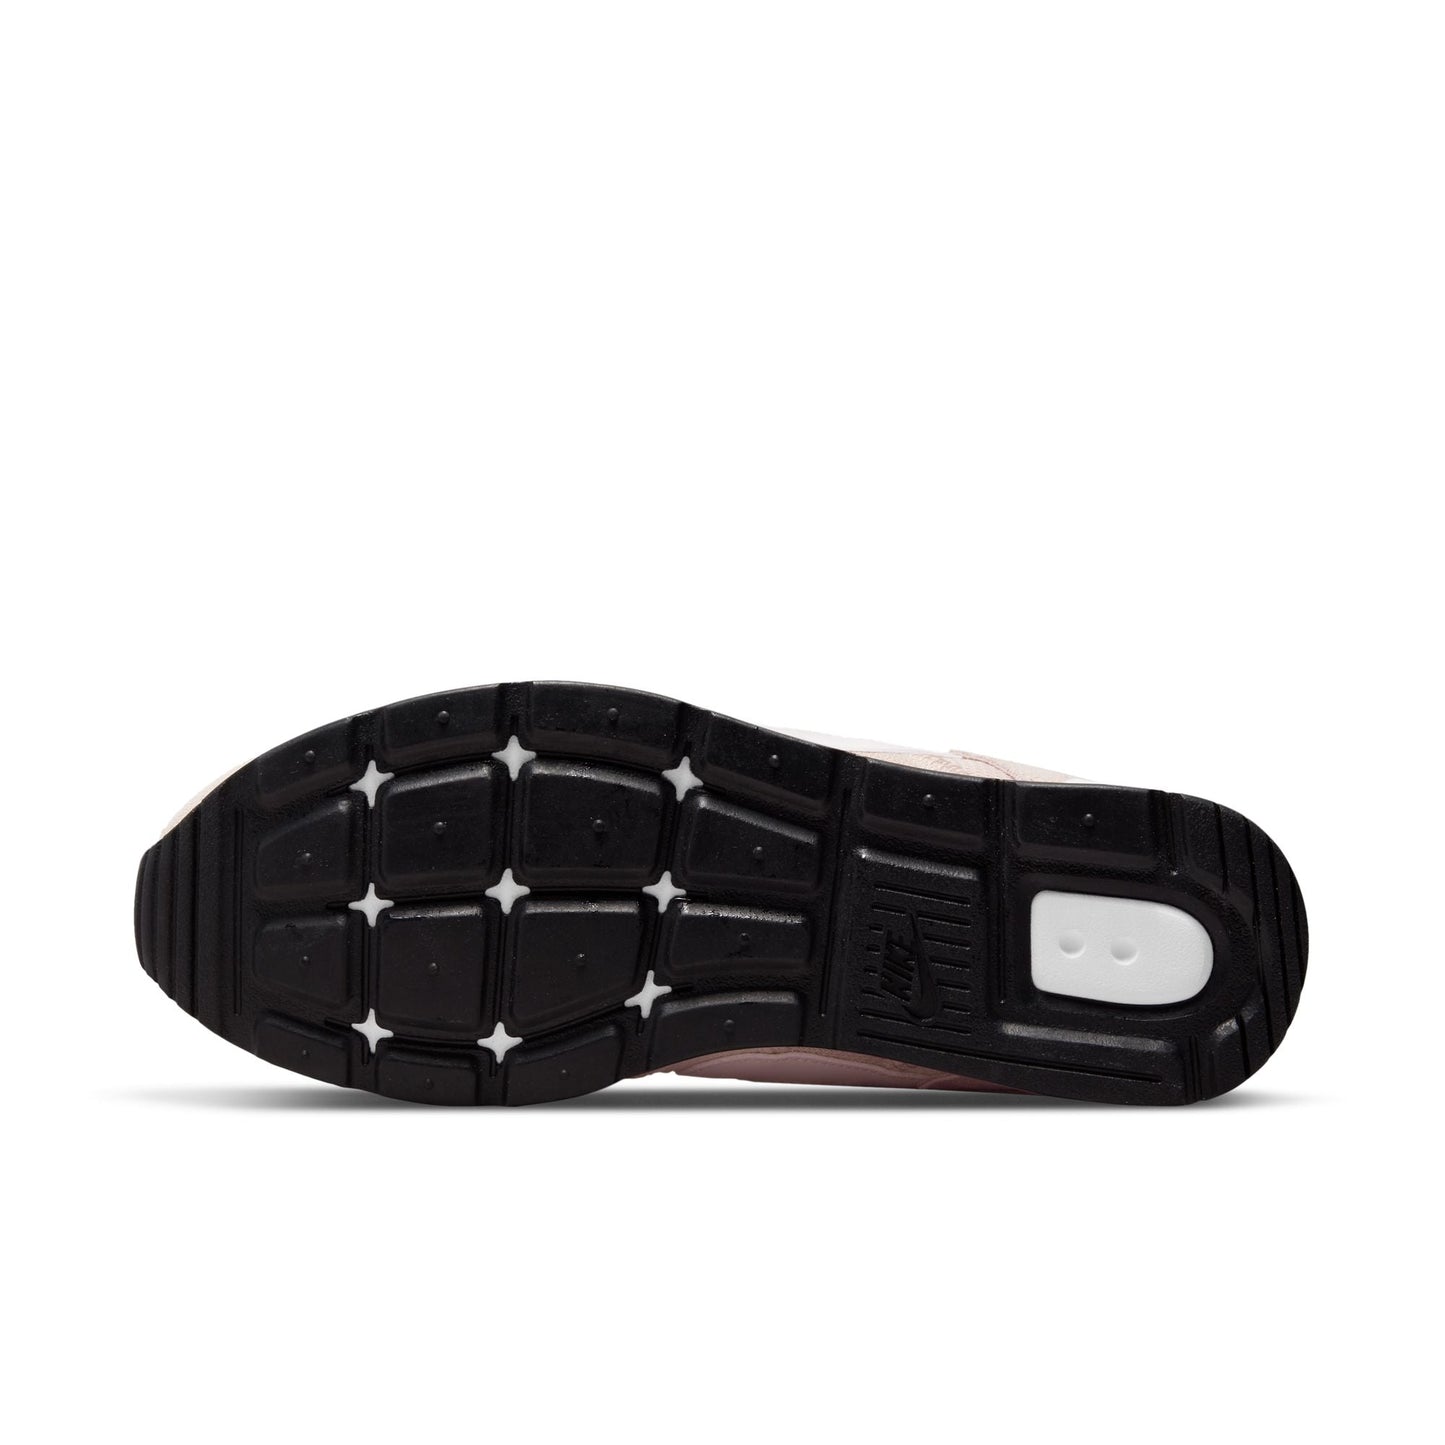 NIKE - נעלי ספורט לנשים Venture Runner בצבע ורוד ולבן - MASHBIR//365